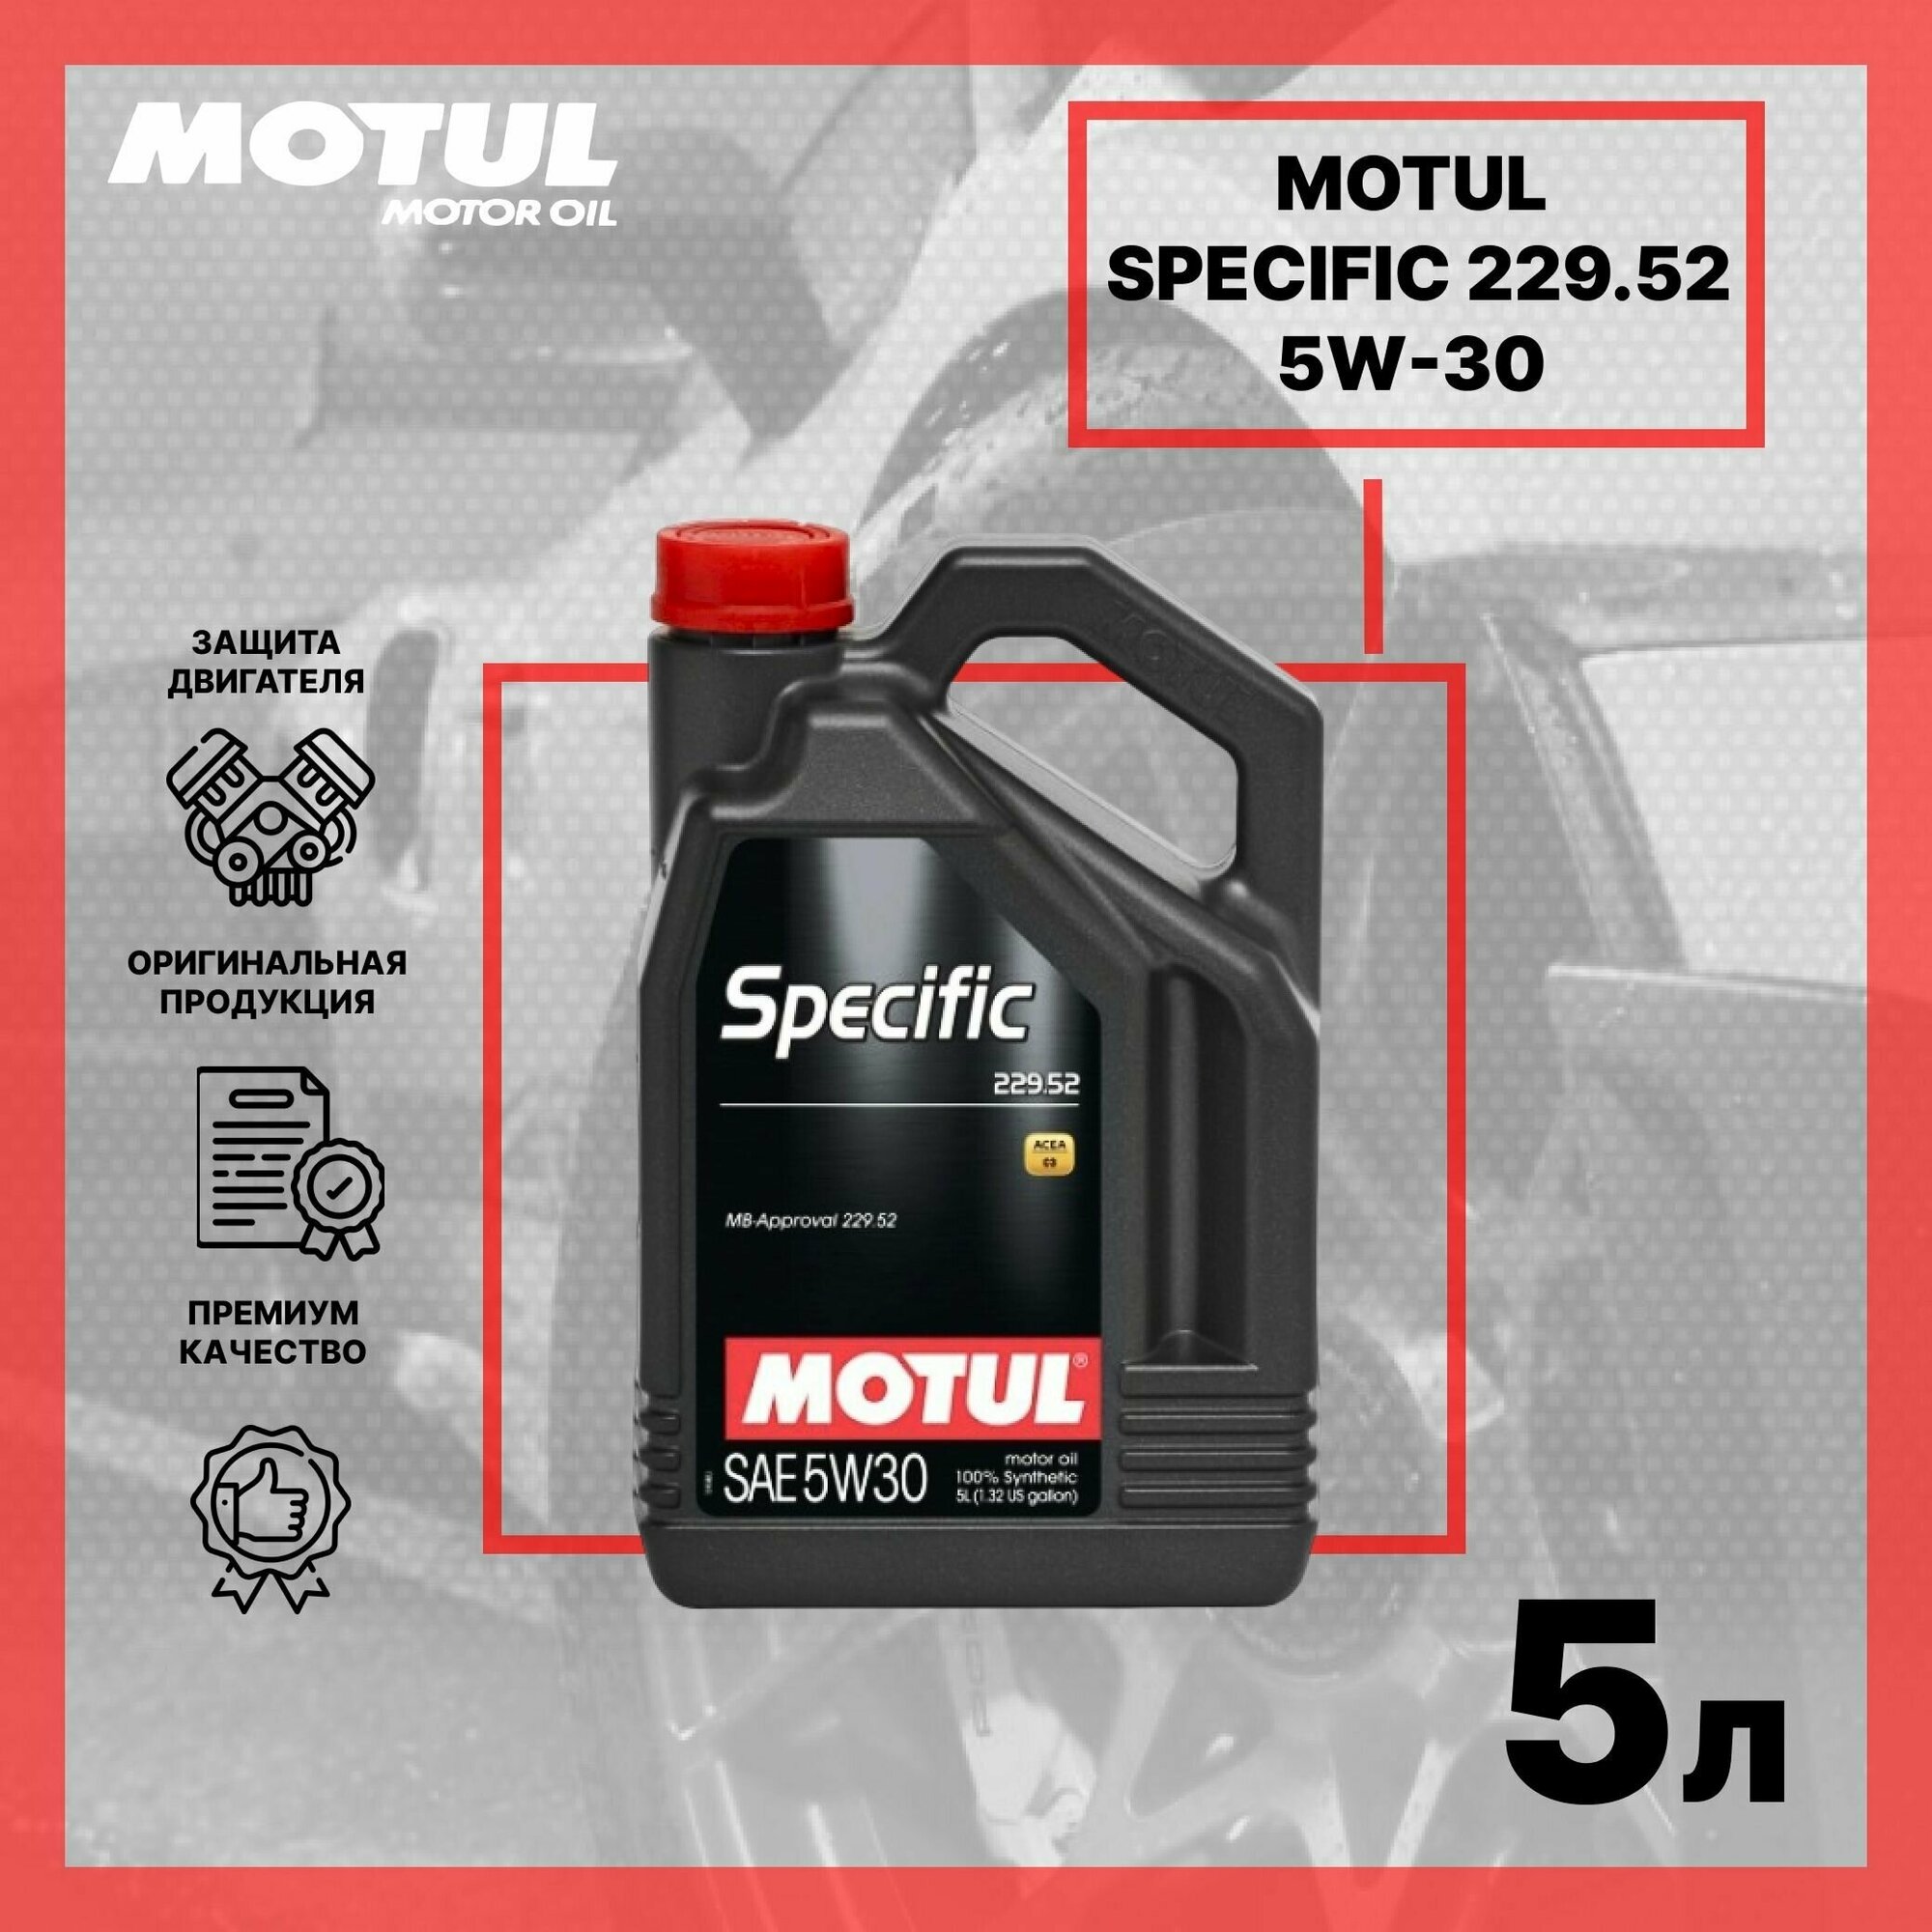 Моторное масло Motul - фото №11